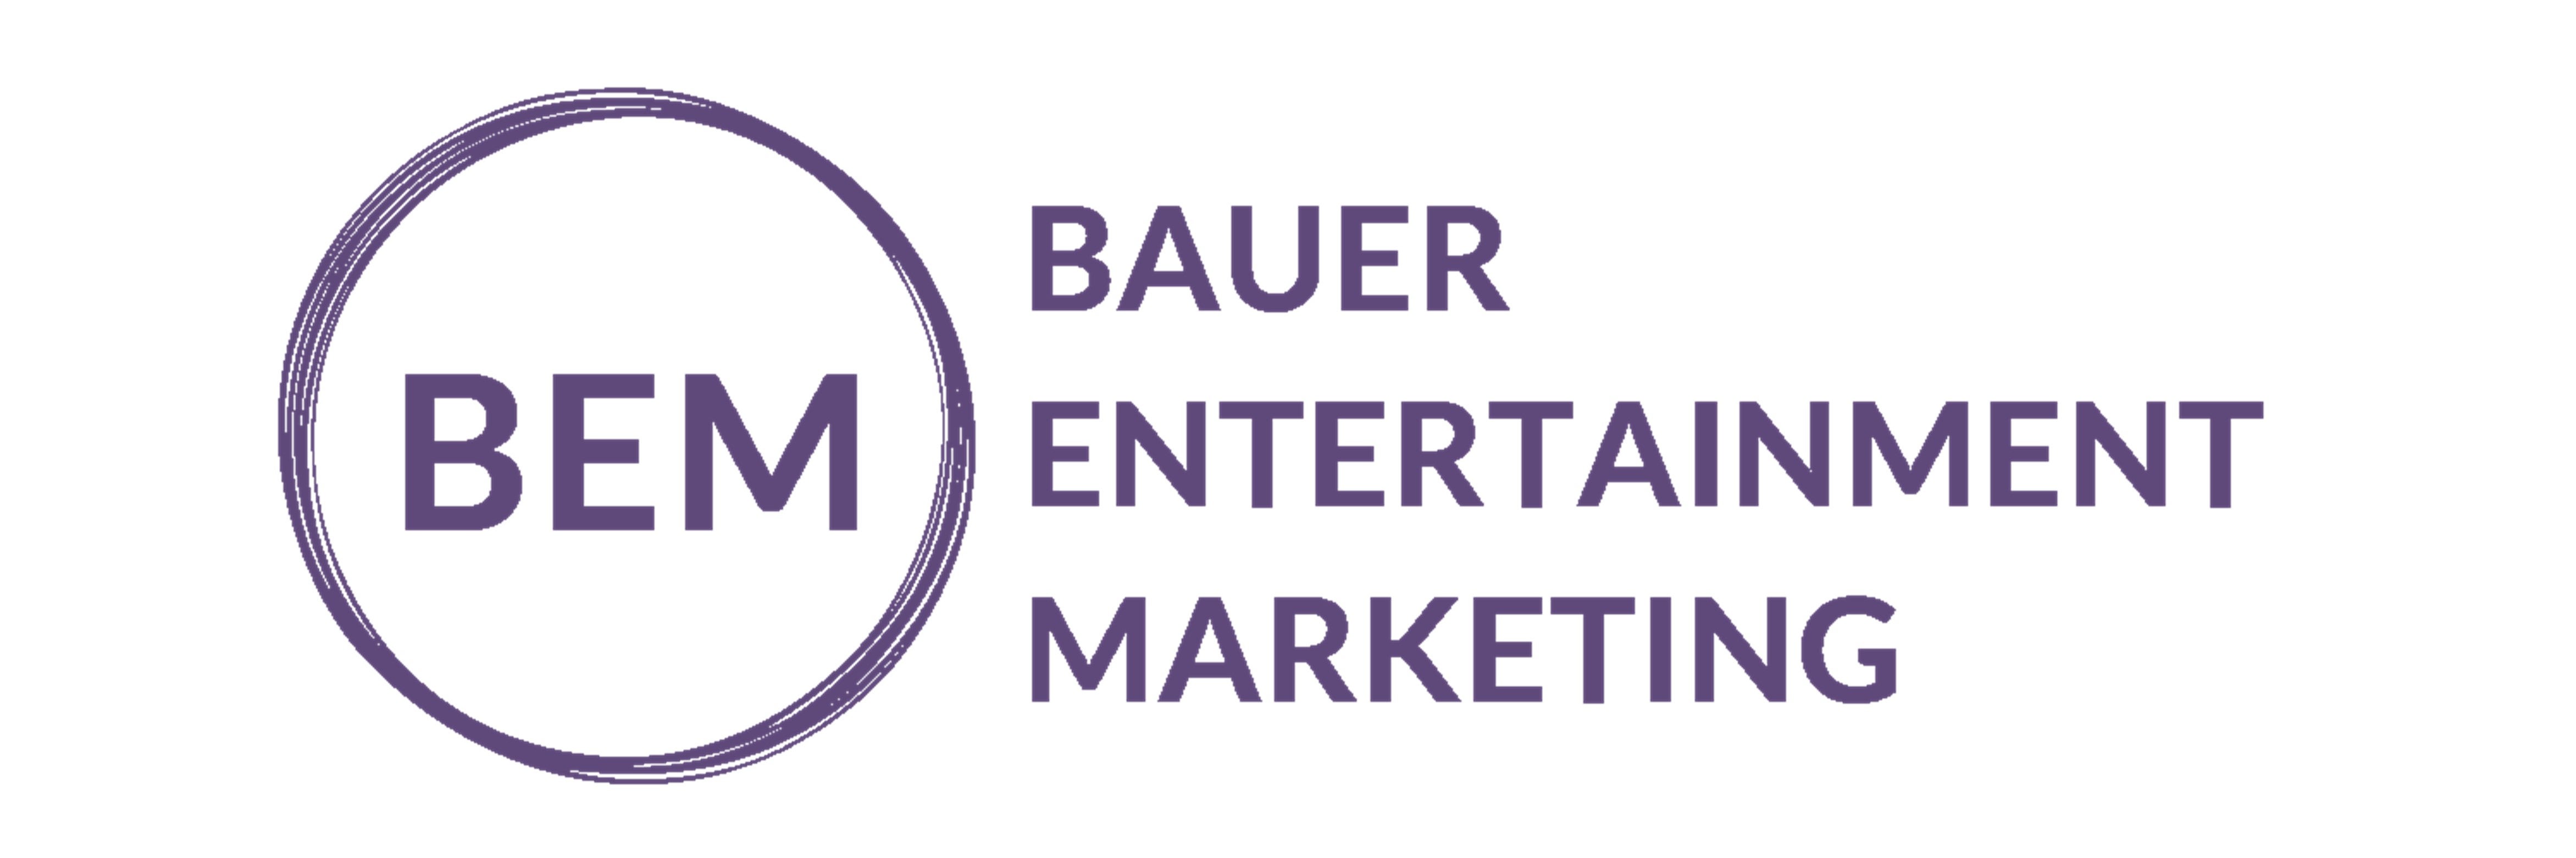 Bauer Entertainment Marketing 